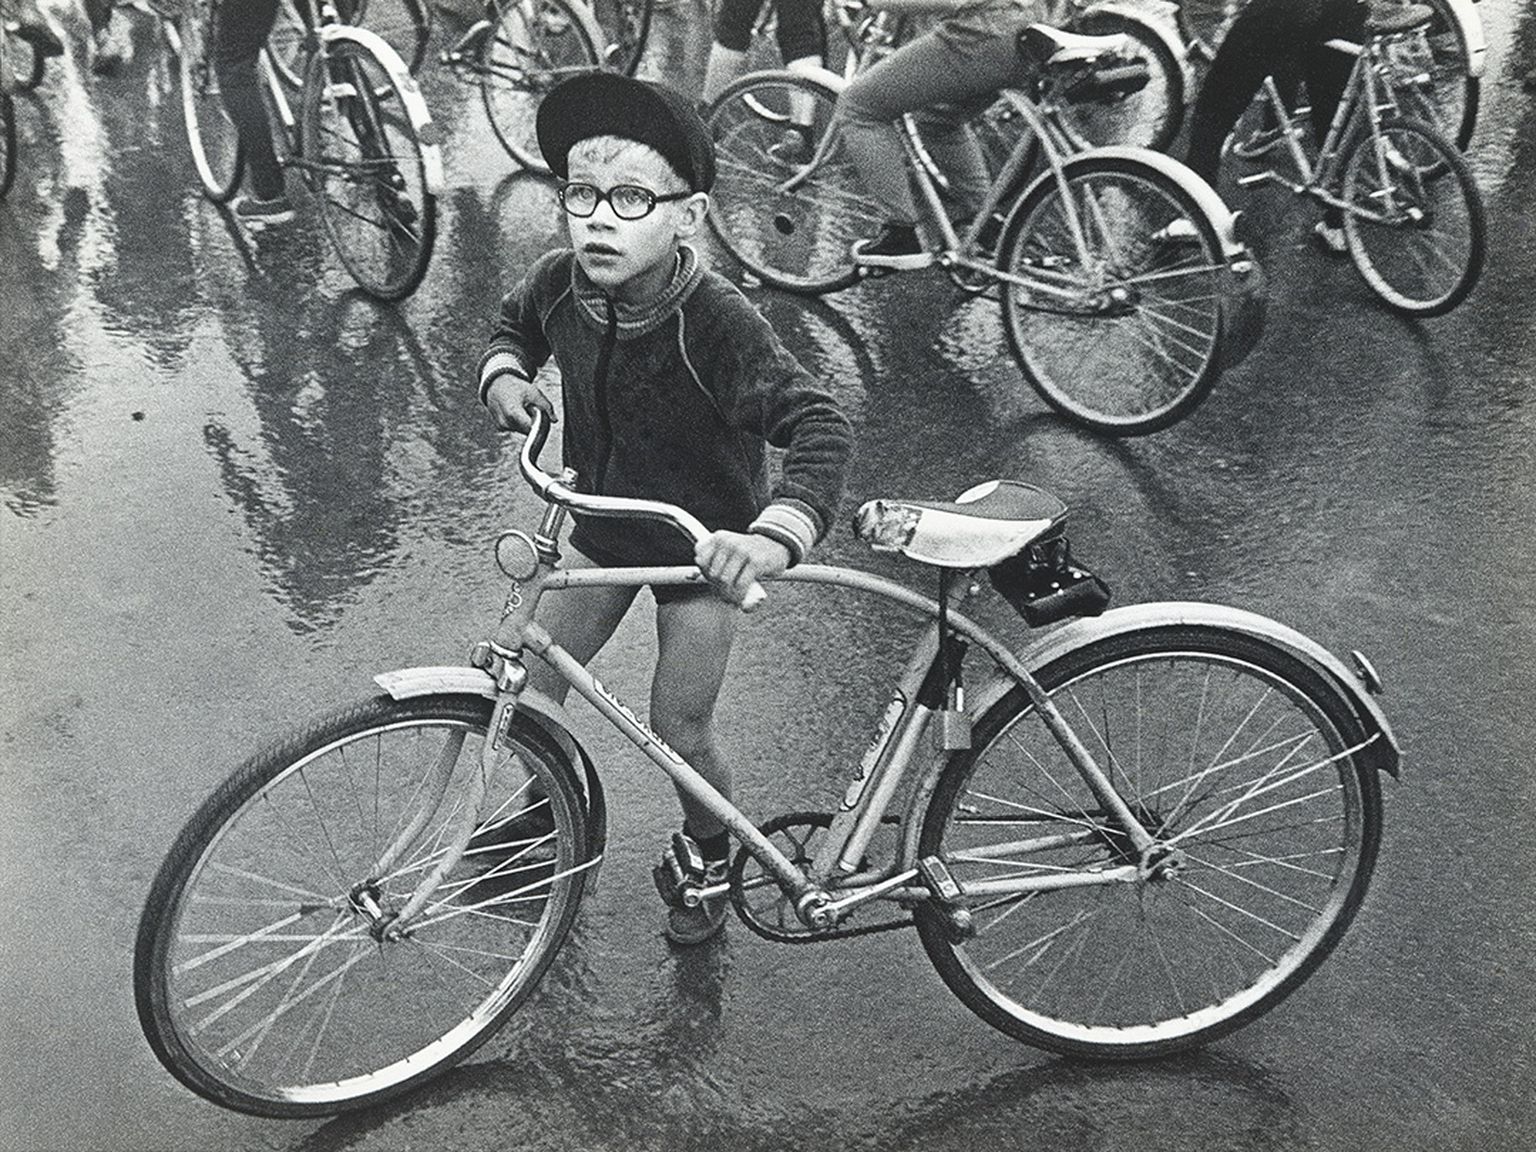 Eesti tänavafotograafia. Tõnu Noorits "Noor rattur" 1980ndad.